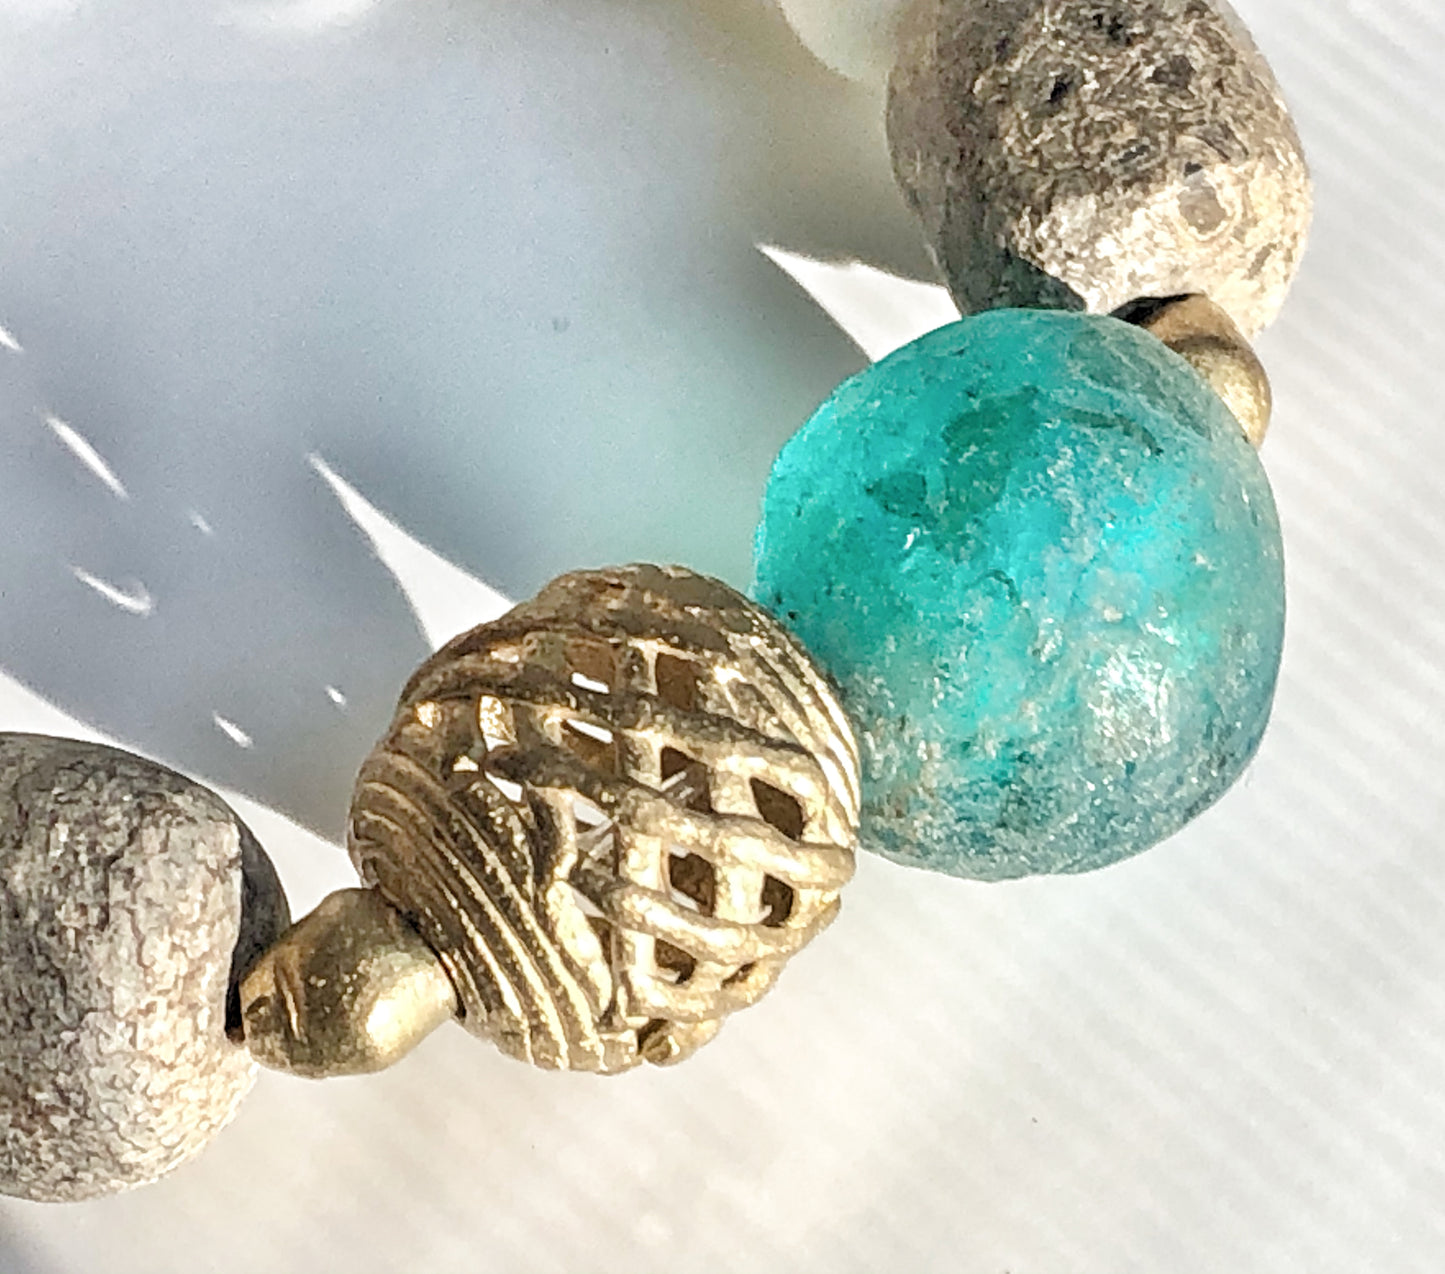 Aqua Blue Recycled Glass Bracelet with Fossilized Stegodon Beads